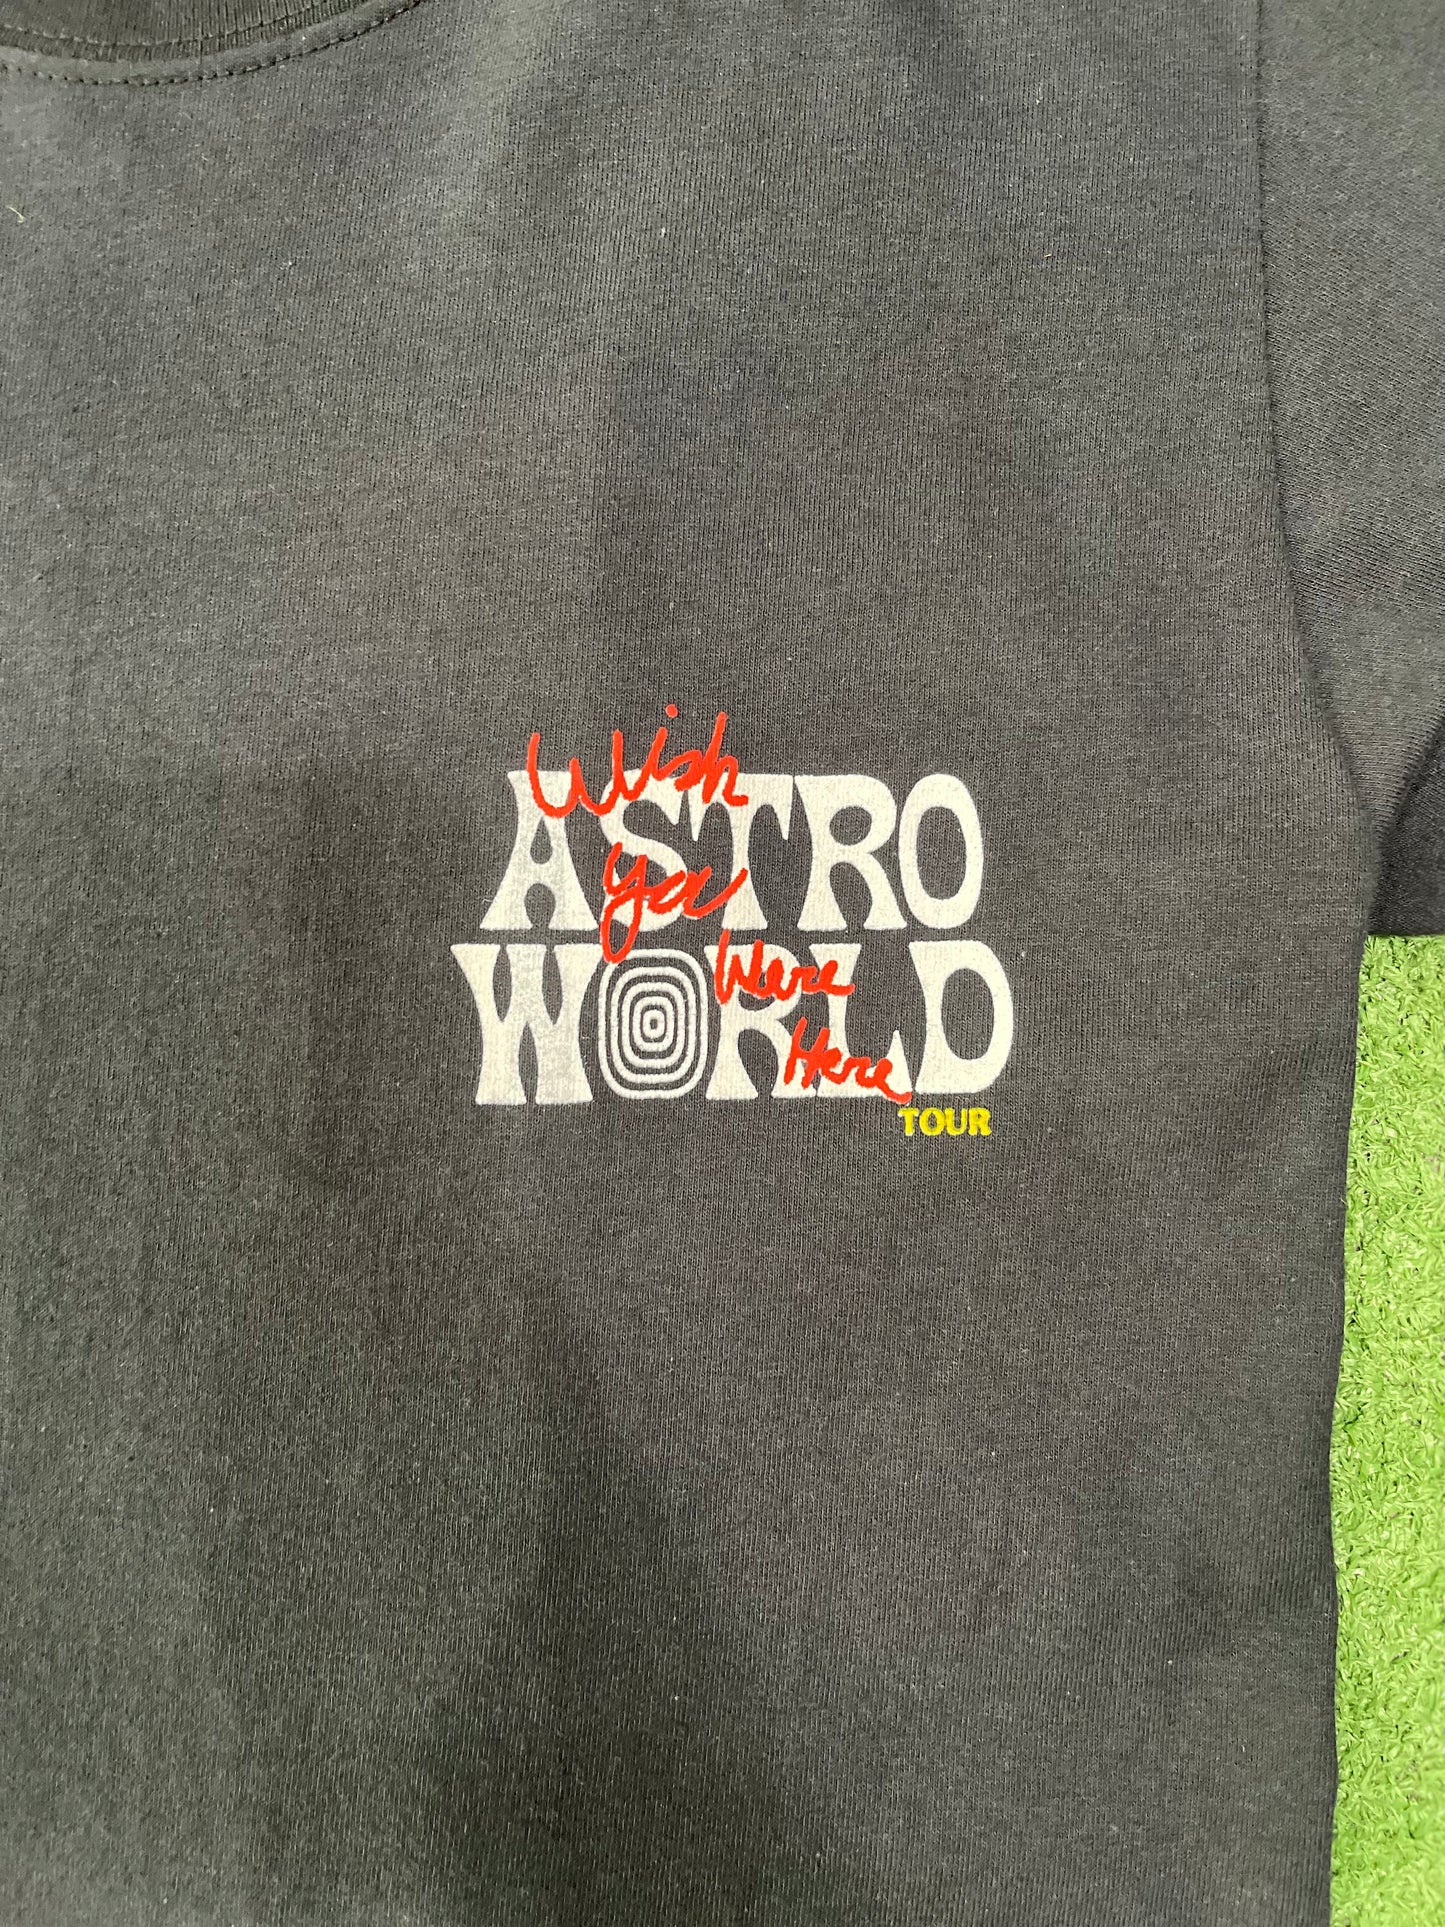 Travis Scott Astroworld Tour Wish You Were Here Tee Black, T-Shirt - Paroissesaintefoy Sneakers Sale Online